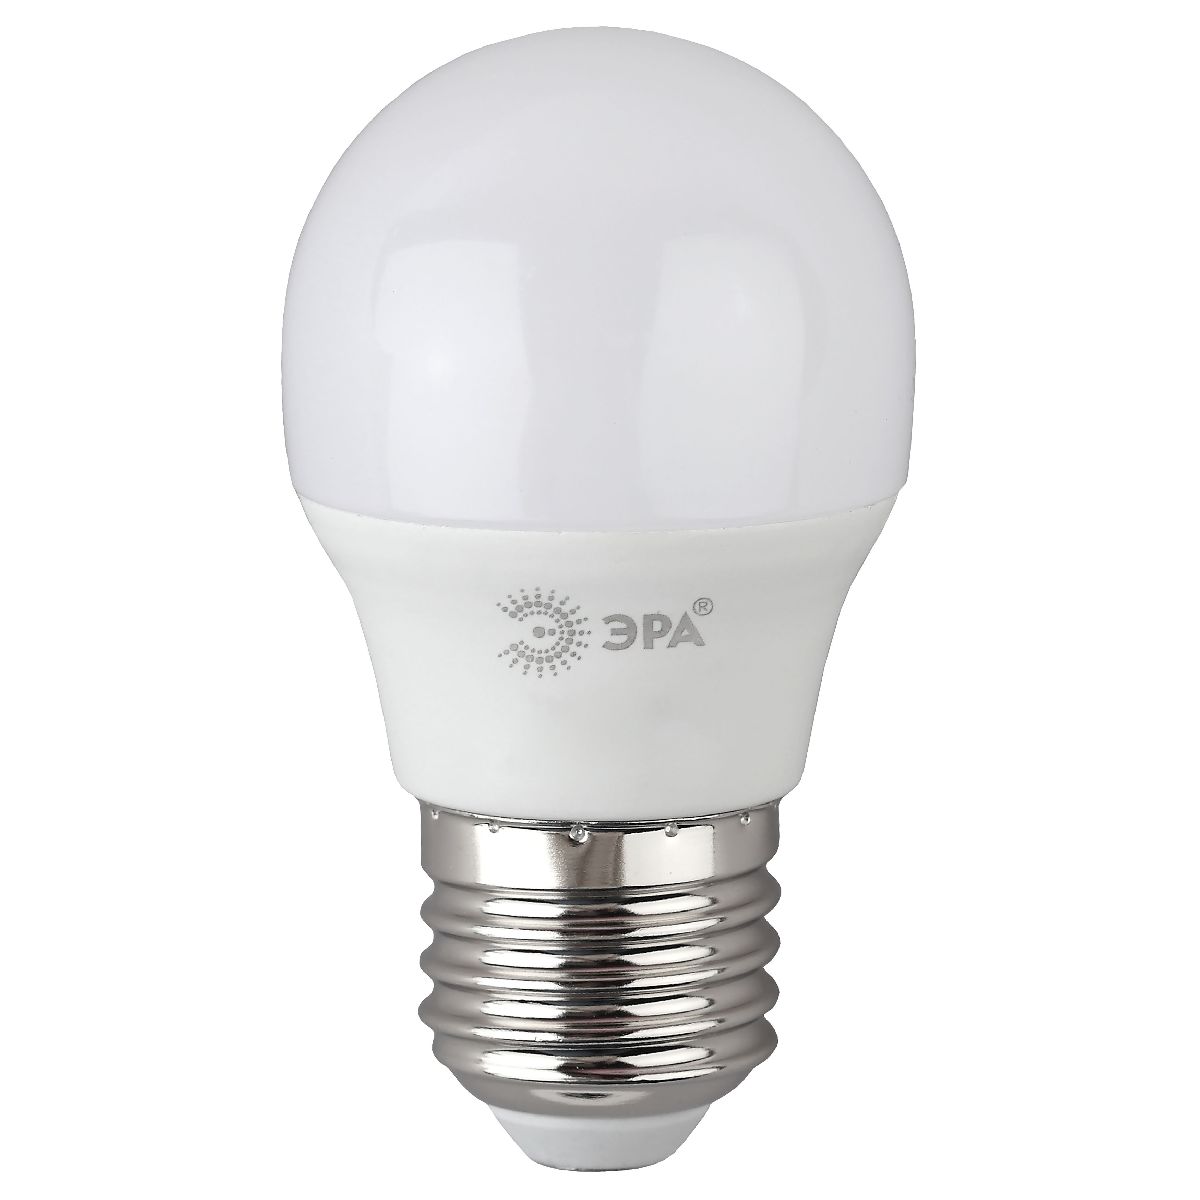 Лампа светодиодная Эра E27 6W 2700K LED P45-6W-827-E27 R Б0049643